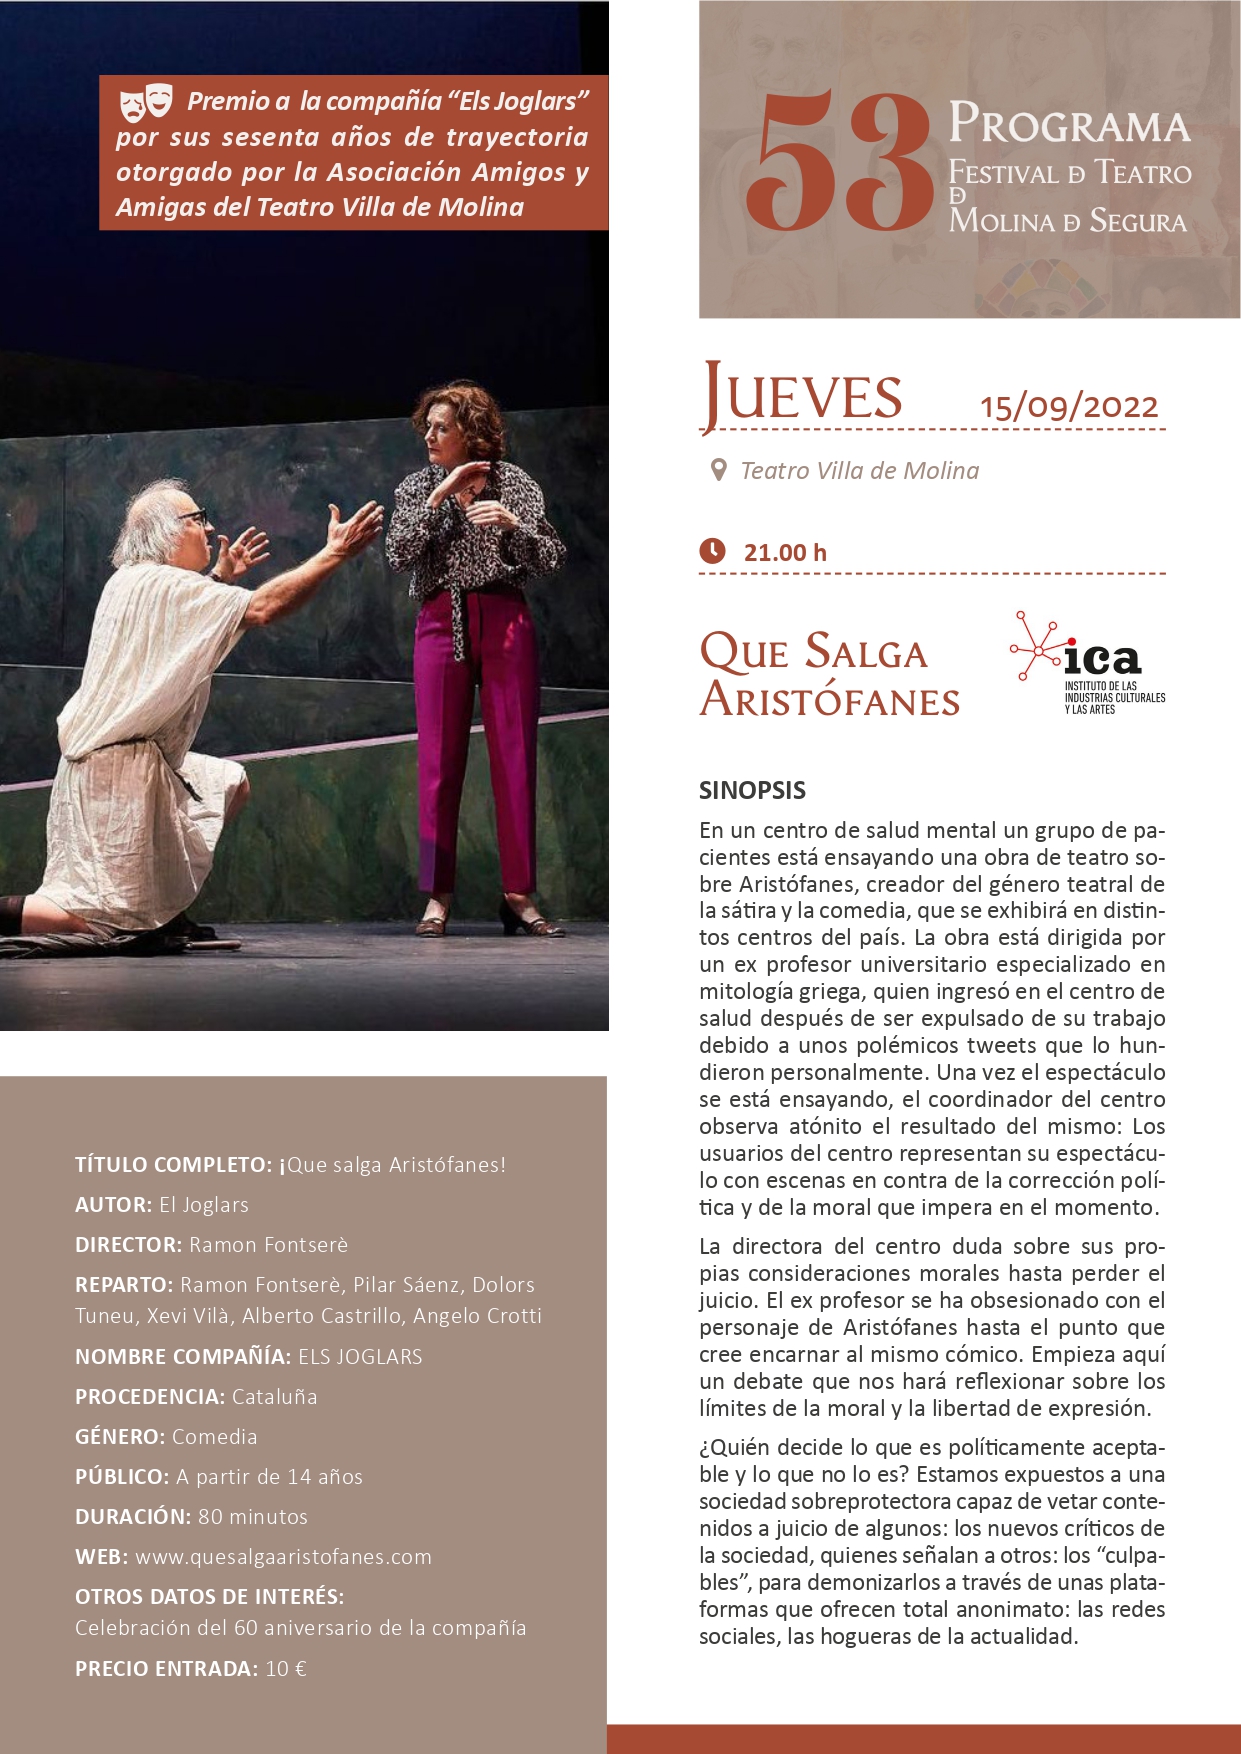 Programa-53-Festival-de-Teatro-de-Molina-de-Segura_page-0001.jpg